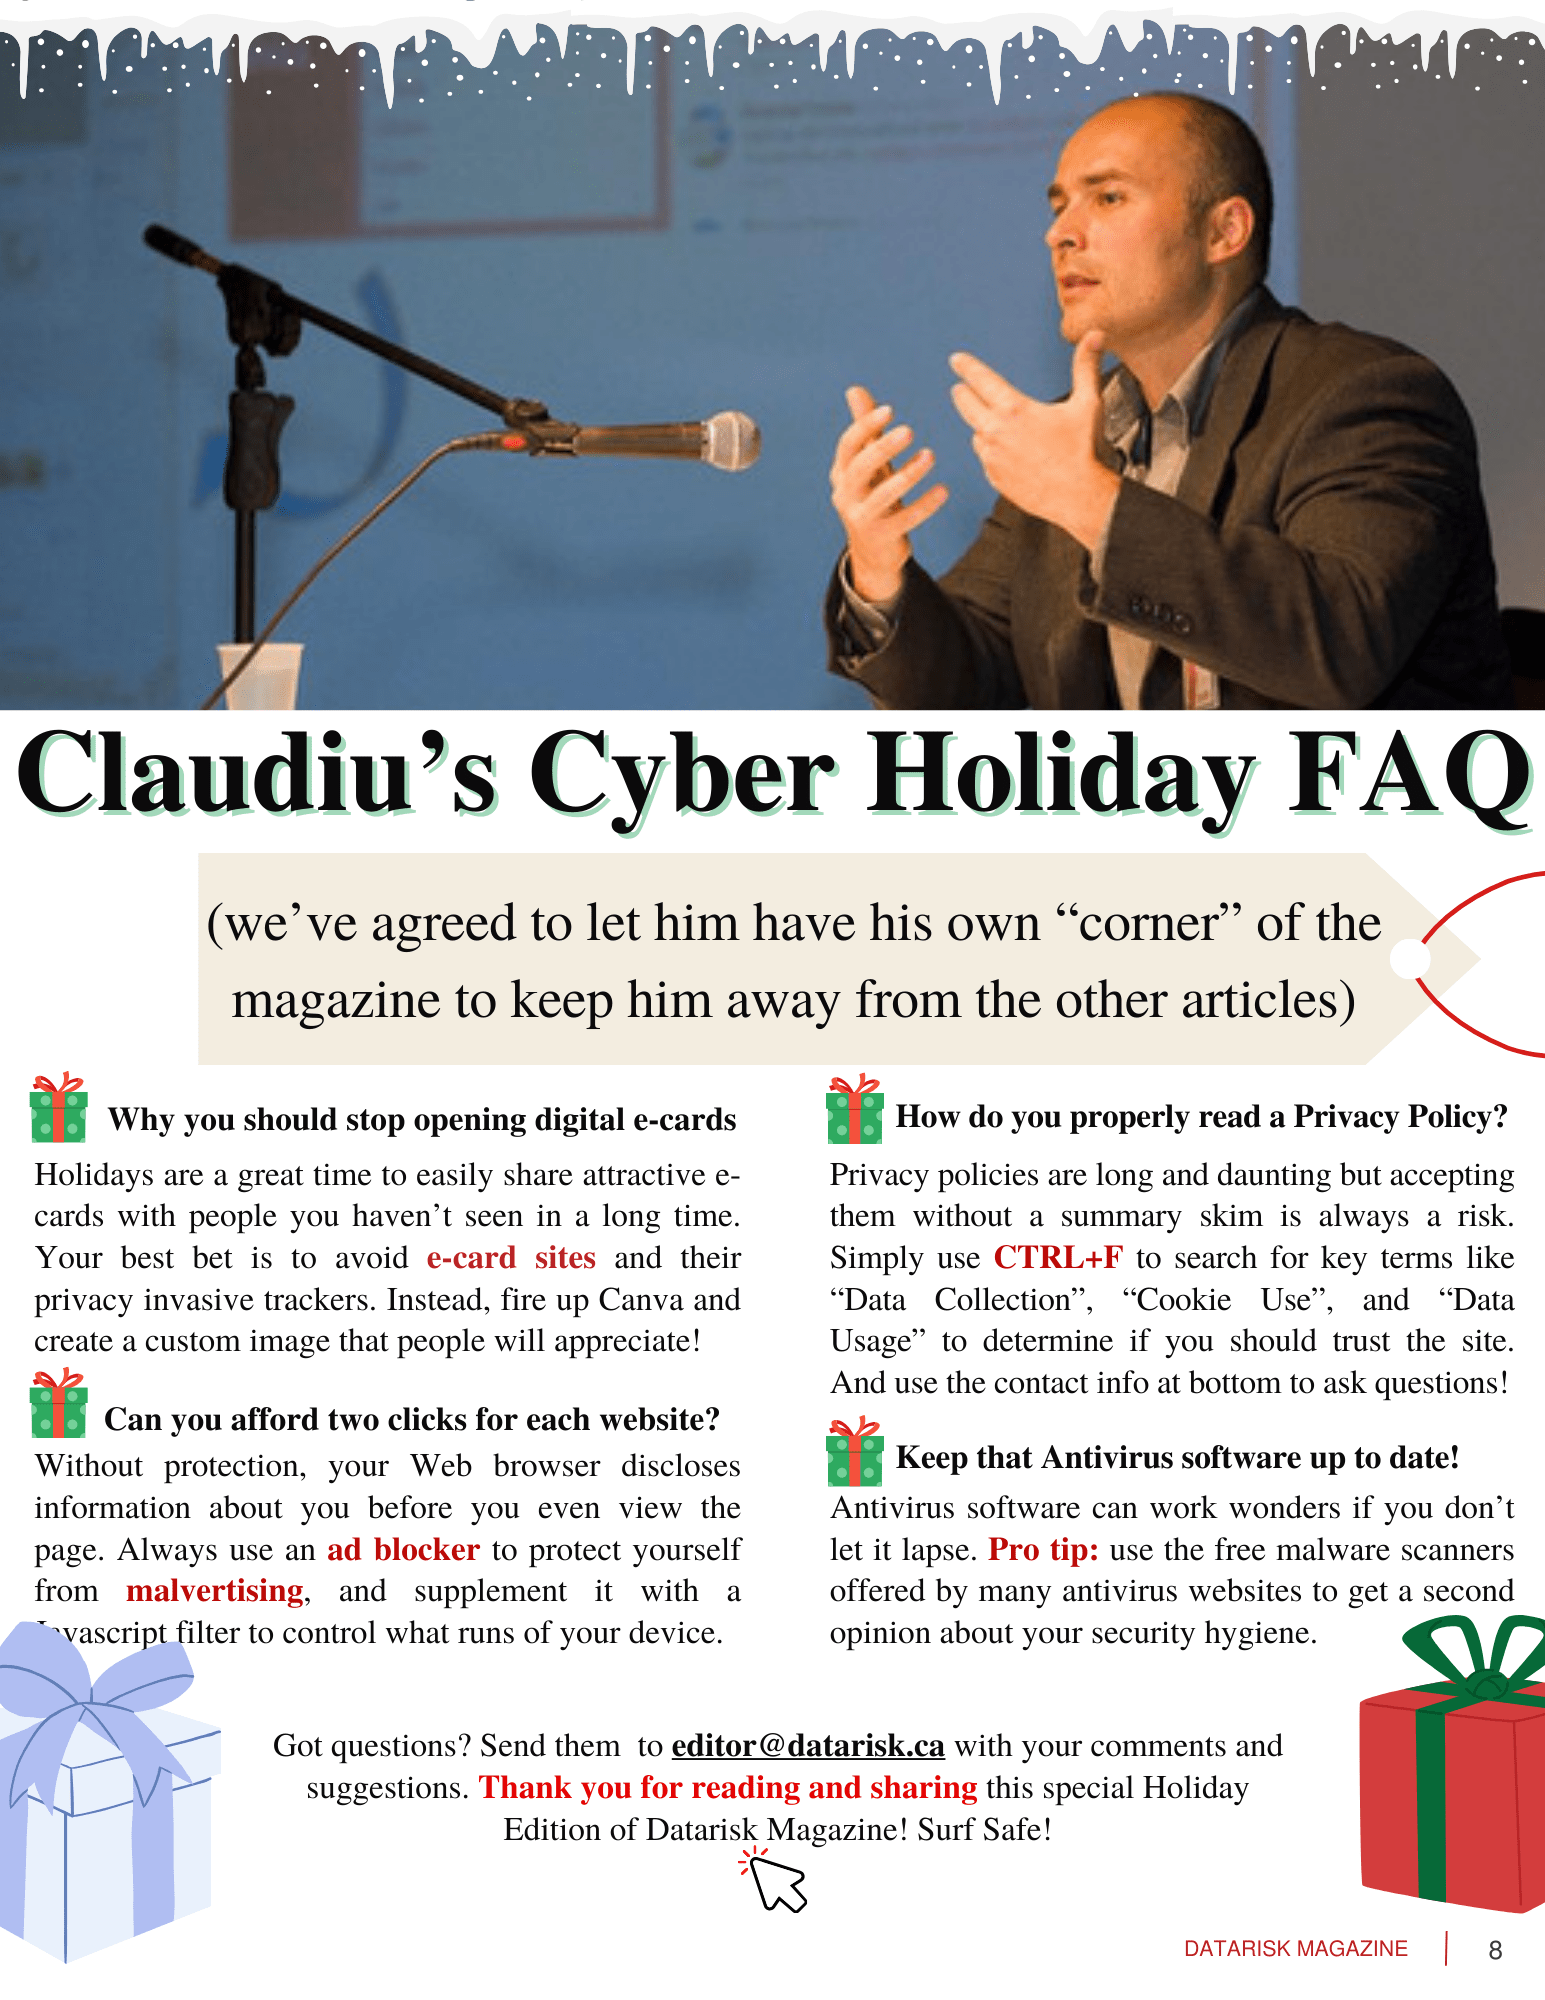 Article 6 Claudius Cyberholiday FAQ